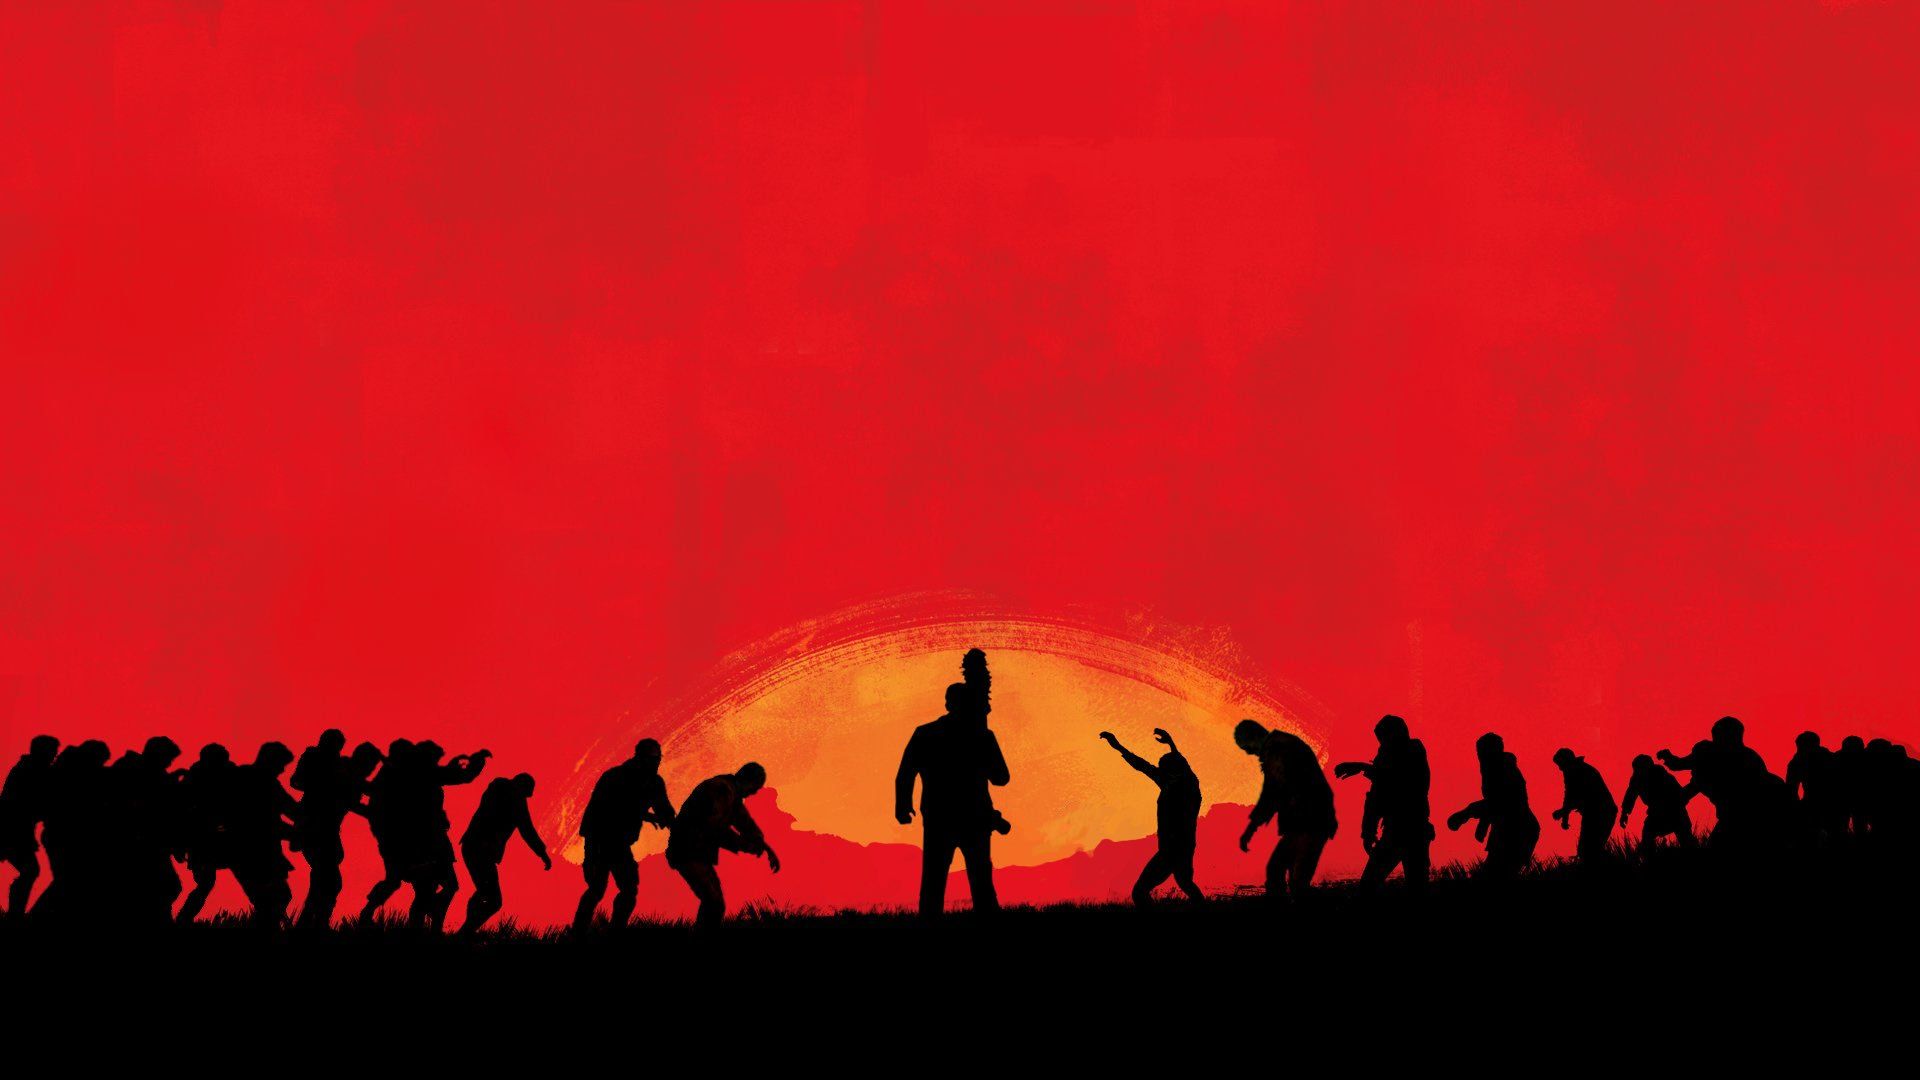 Red Dead Redemption 2 Wallpaper Background. Wallpaper background, Red dead redemption, Wallpaper